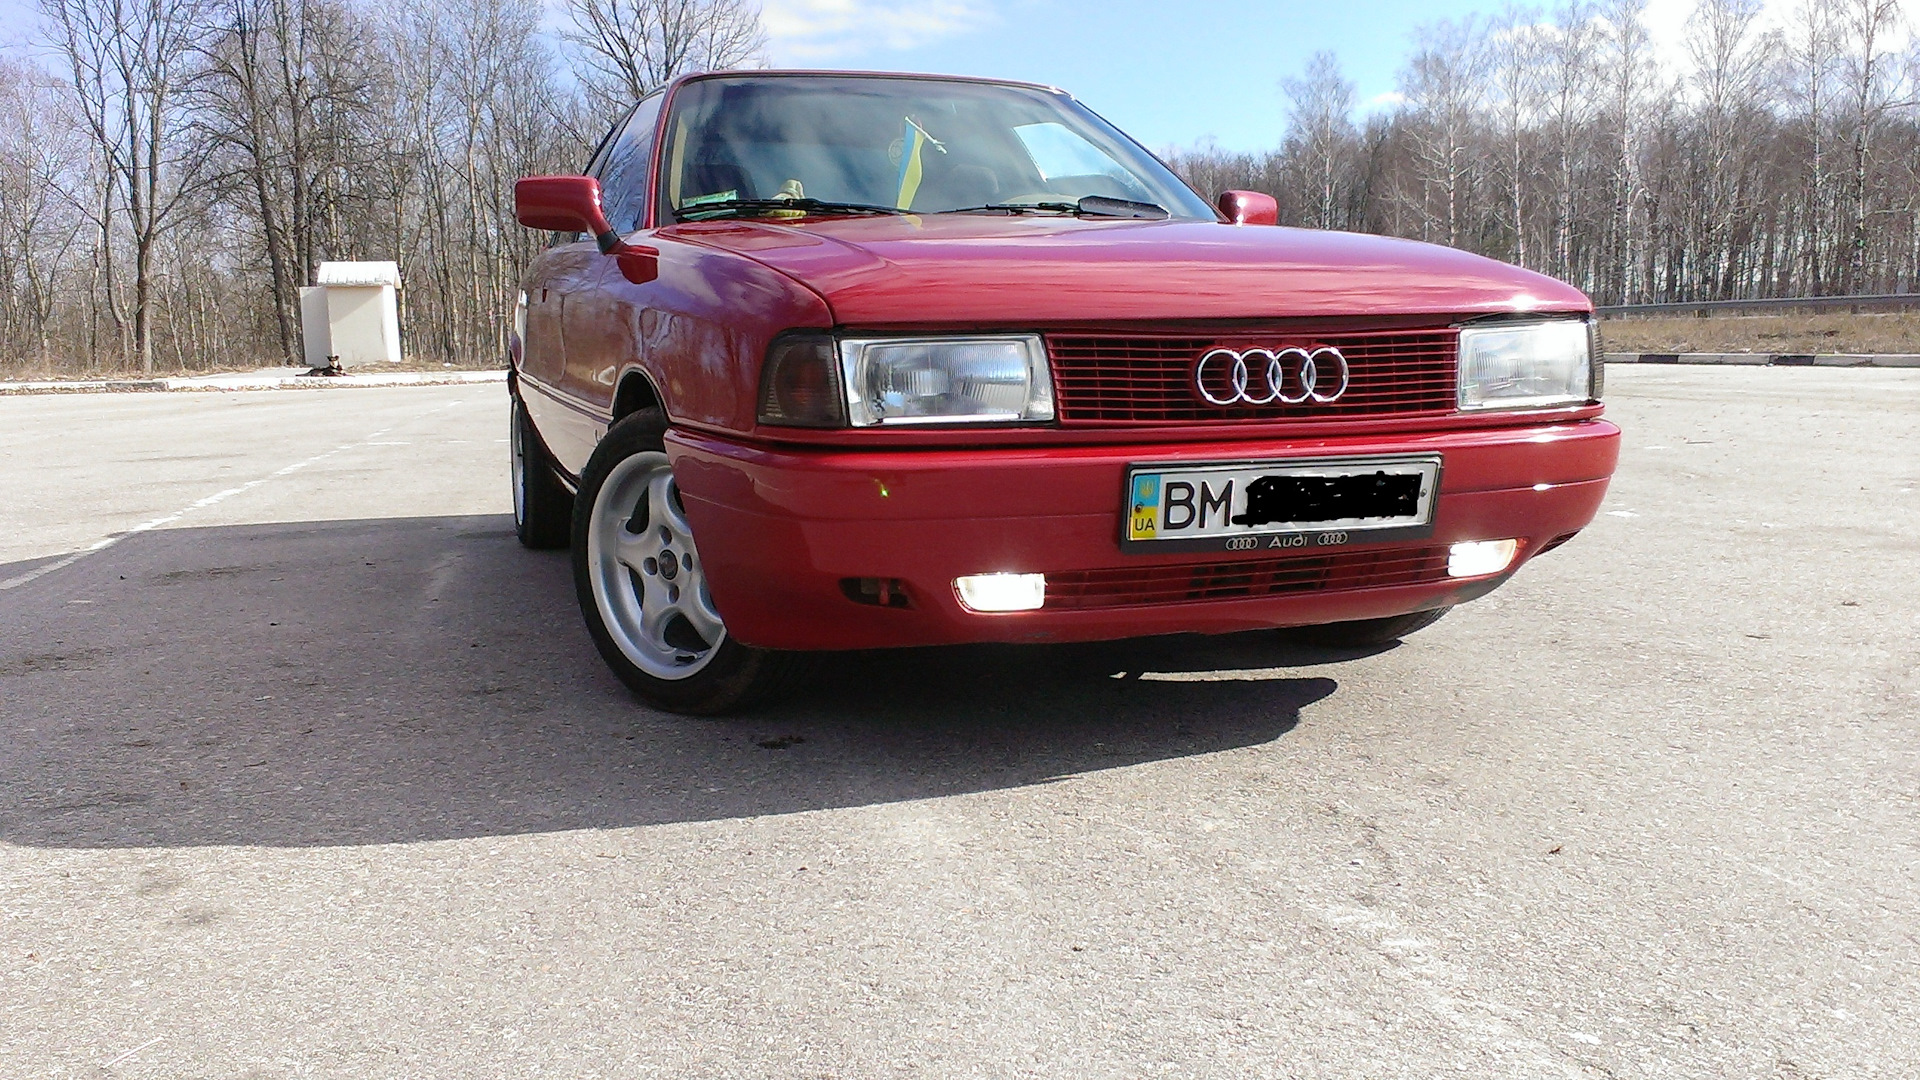 Ауди 80 1987. Audi 80 1987. "Audi" "80" "1987" ZX. "Audi" "80" "1987" ZK.